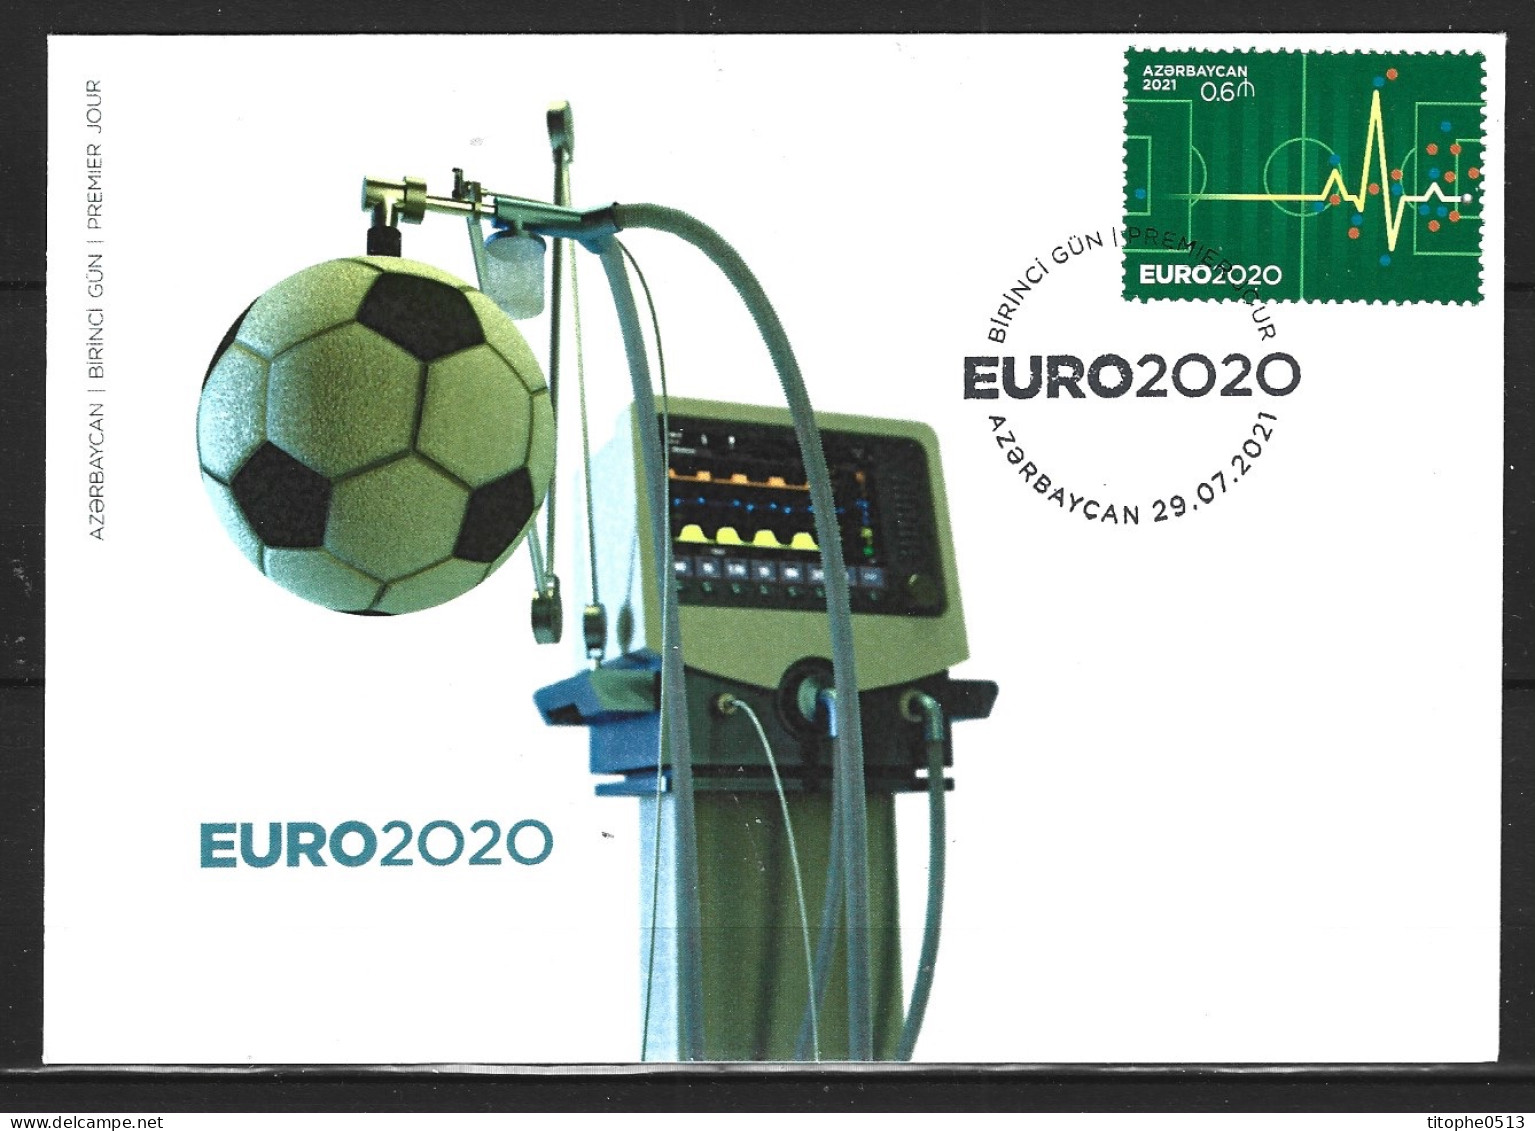 AZERBAIDJAN. Timbre De 2021 Sur Enveloppe 1er Jour. Euro 2020. - UEFA European Championship